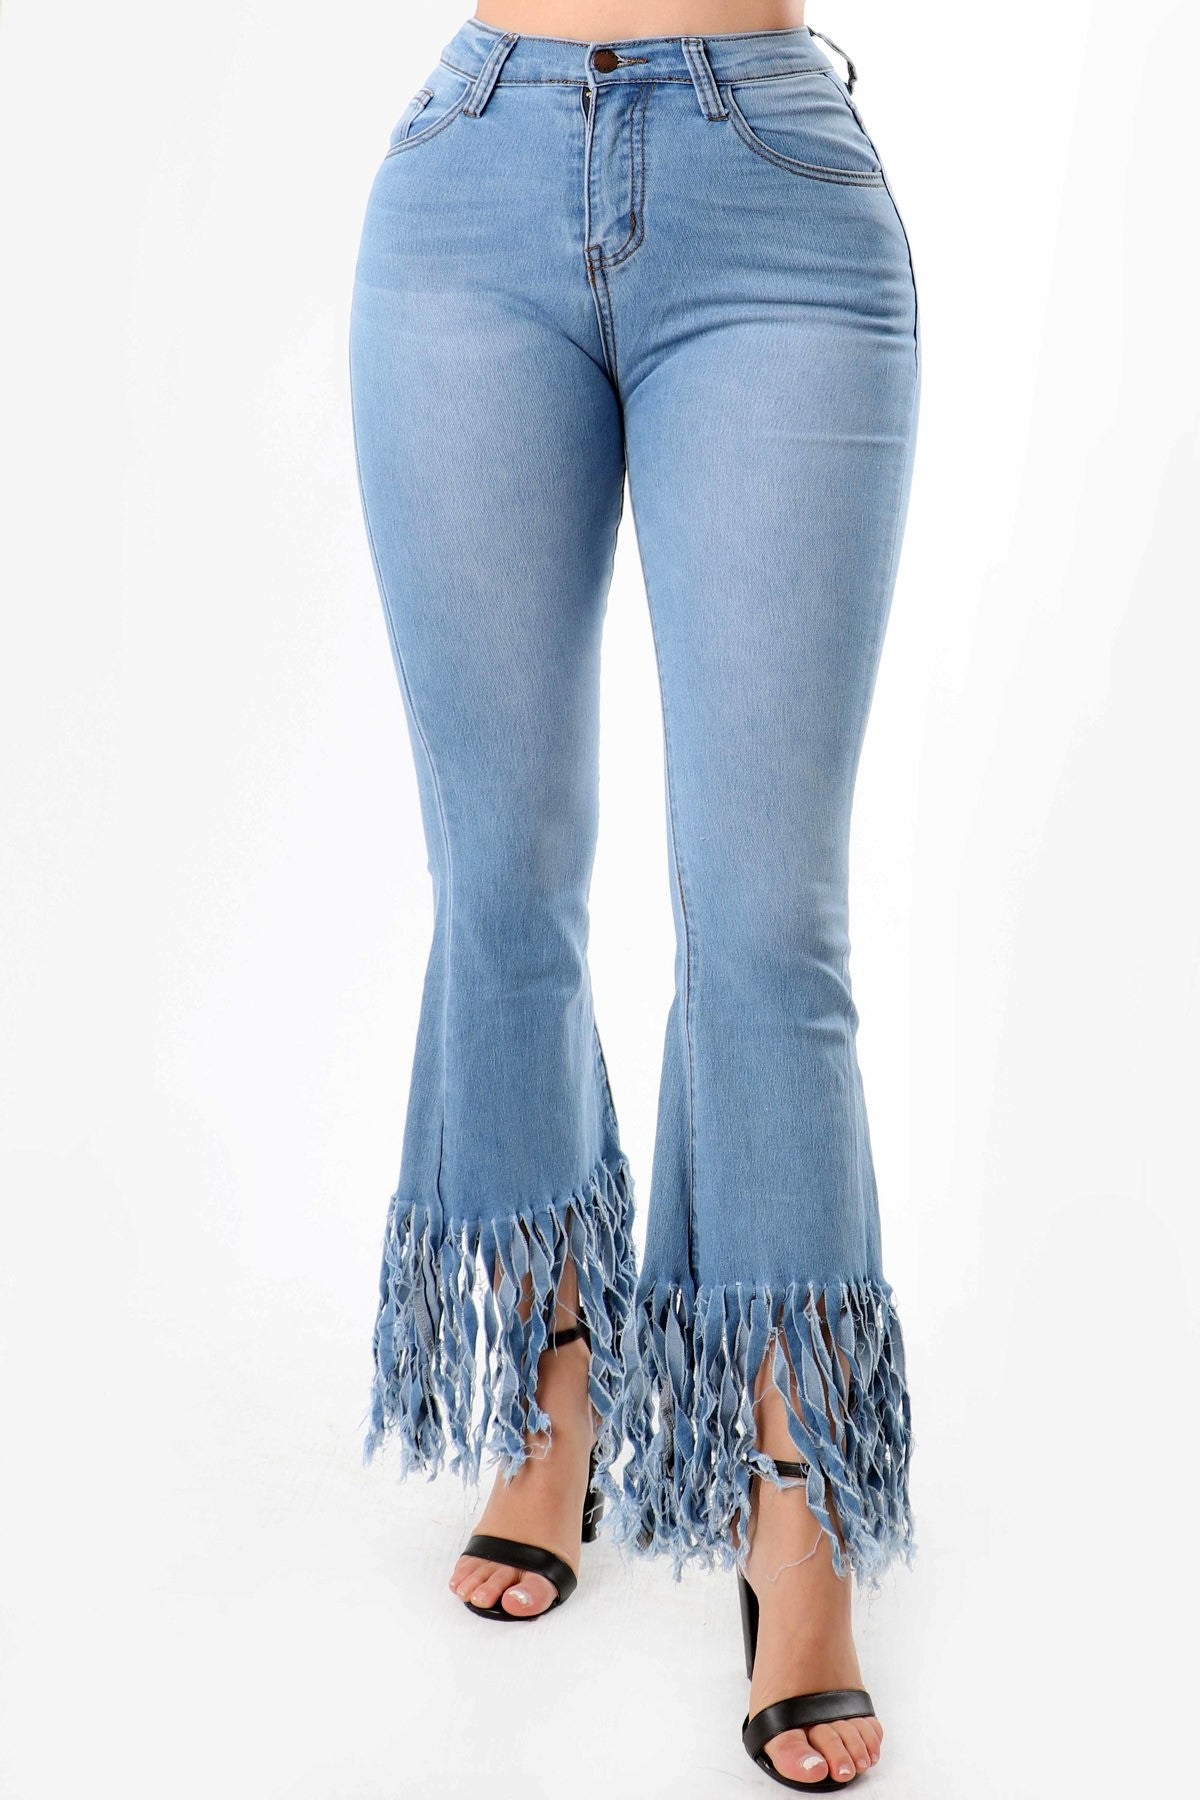 Fancy Fit & Flare Fringe Bell Bottom Jeans –